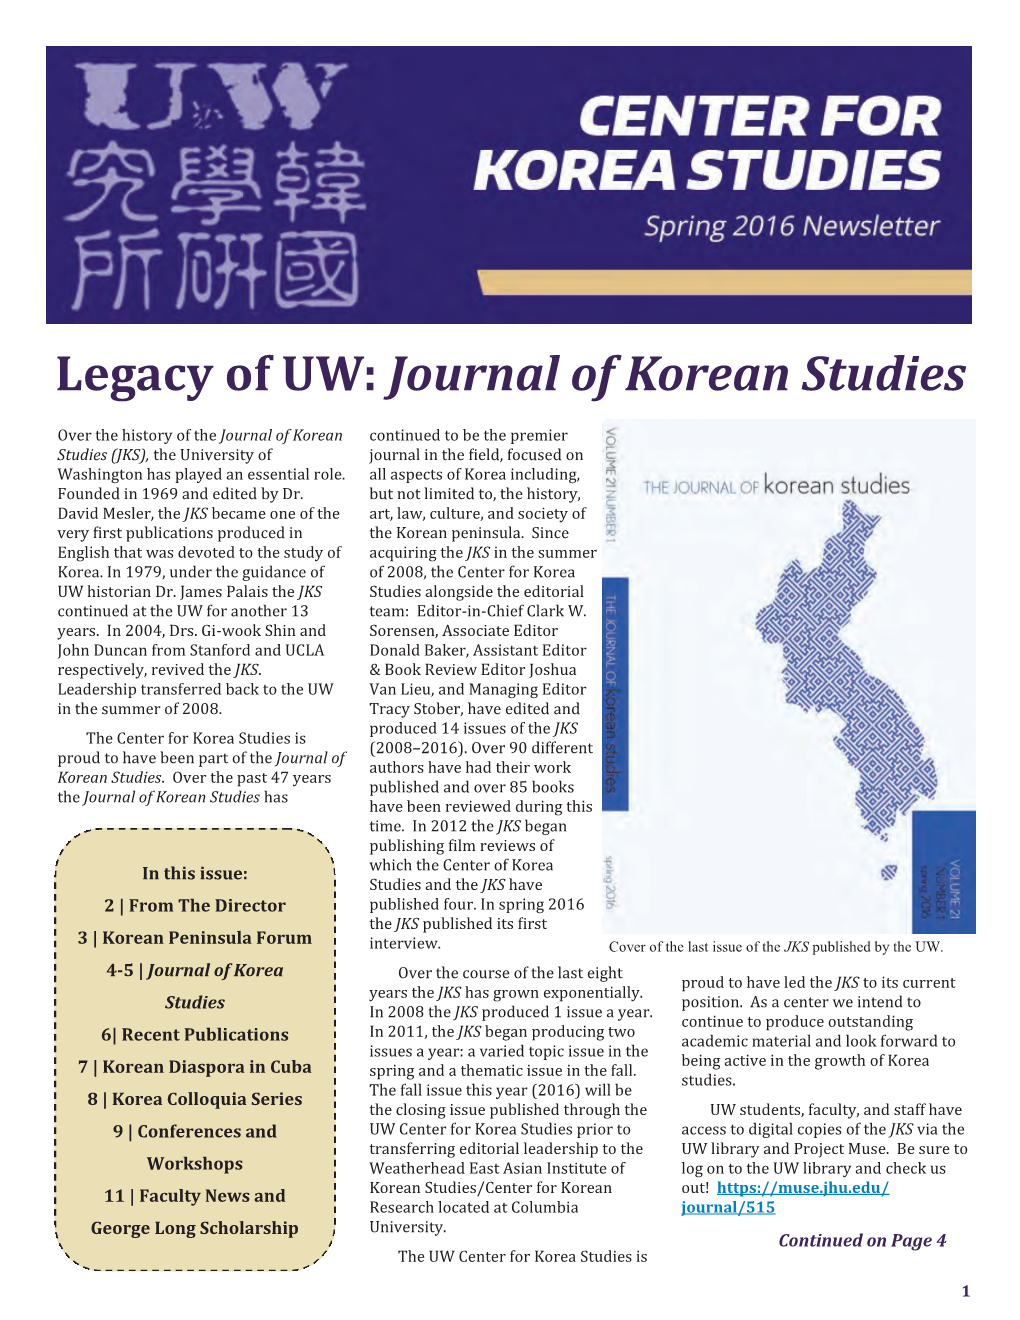 Legacy of UW: Journal of Korean Studies